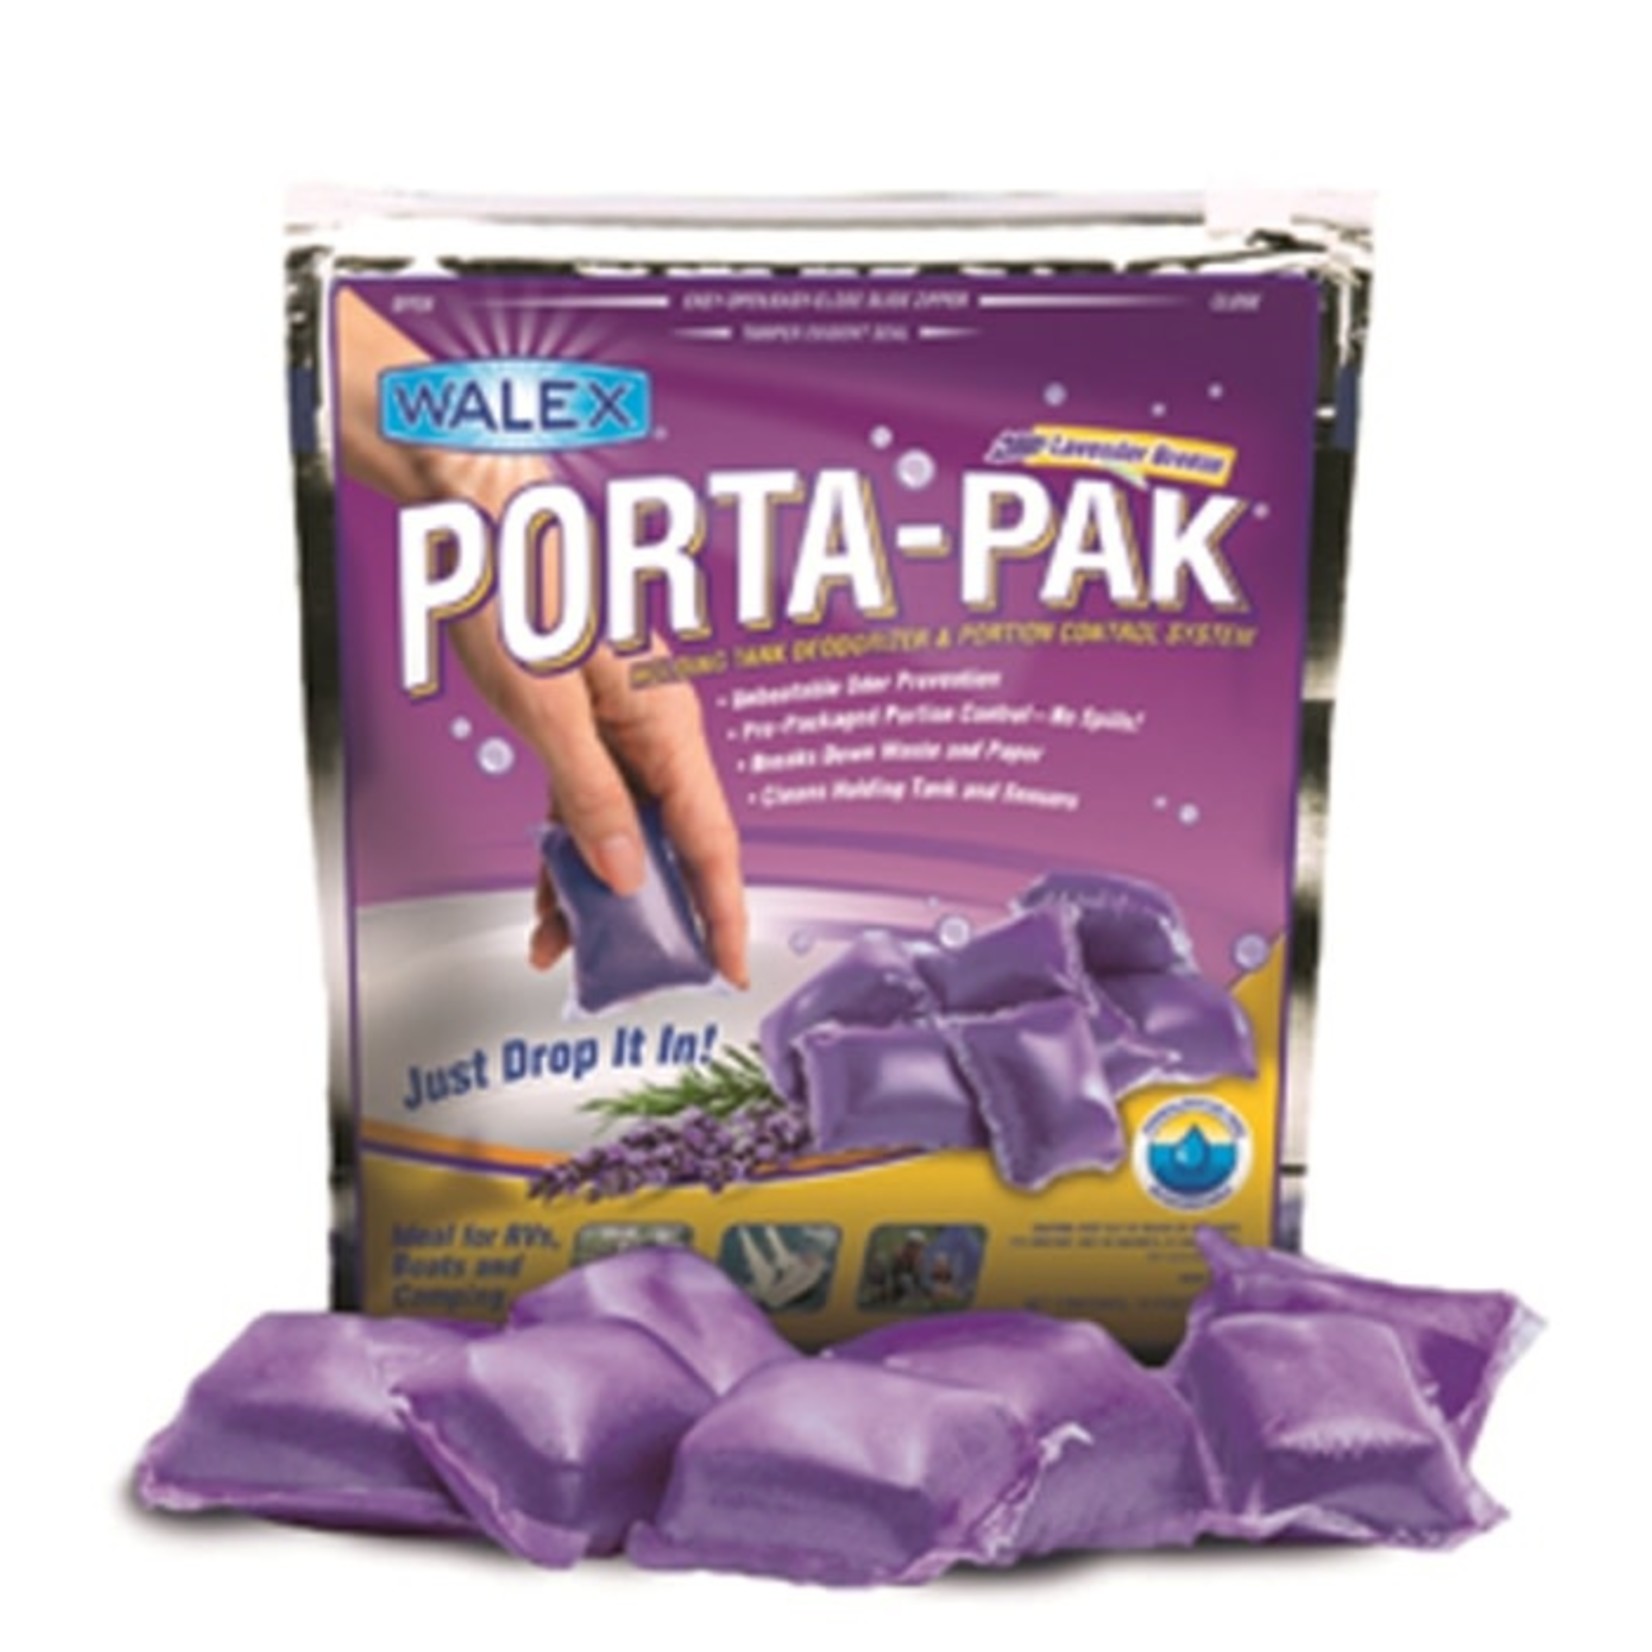 Walex Porta-pak Lavender breeze 10 pack